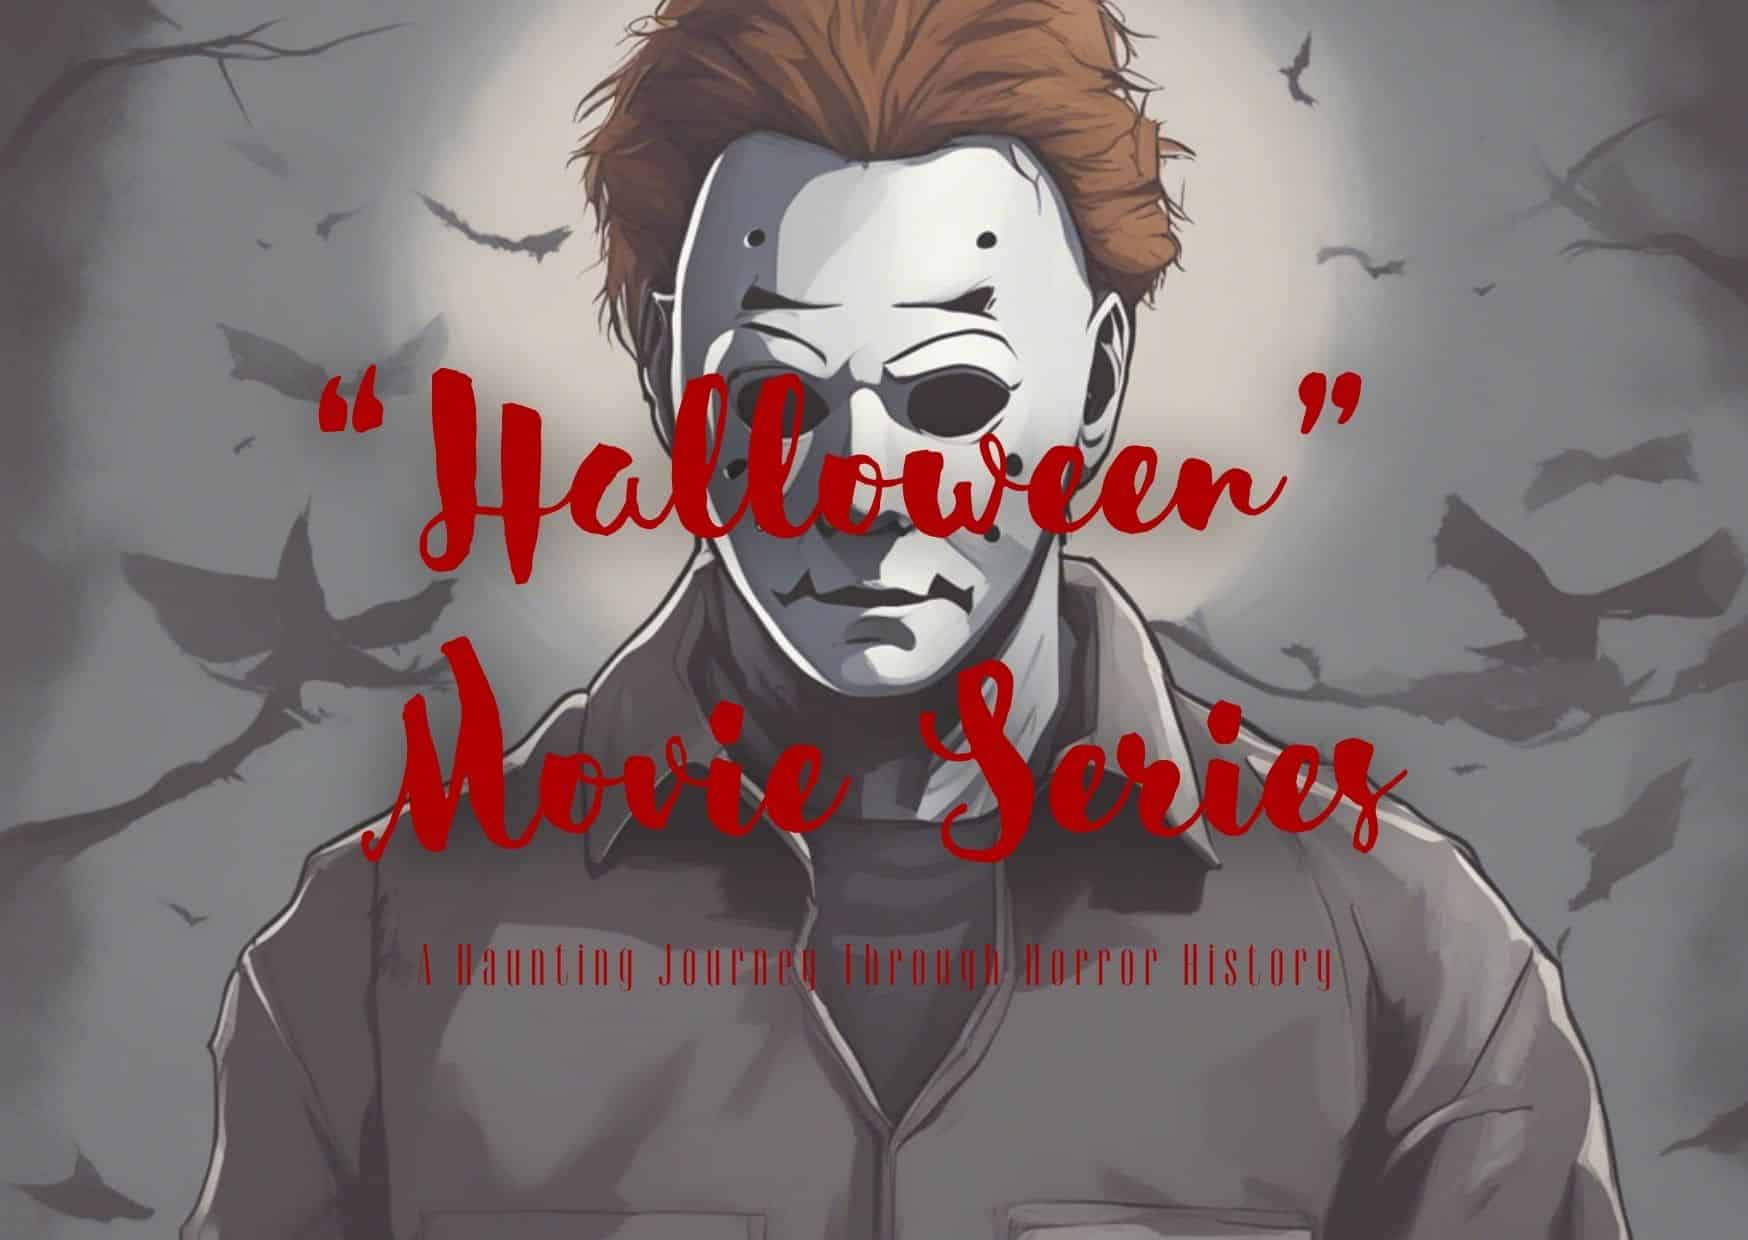 Halloween Movie Series: A Haunting Journey Through Horror History